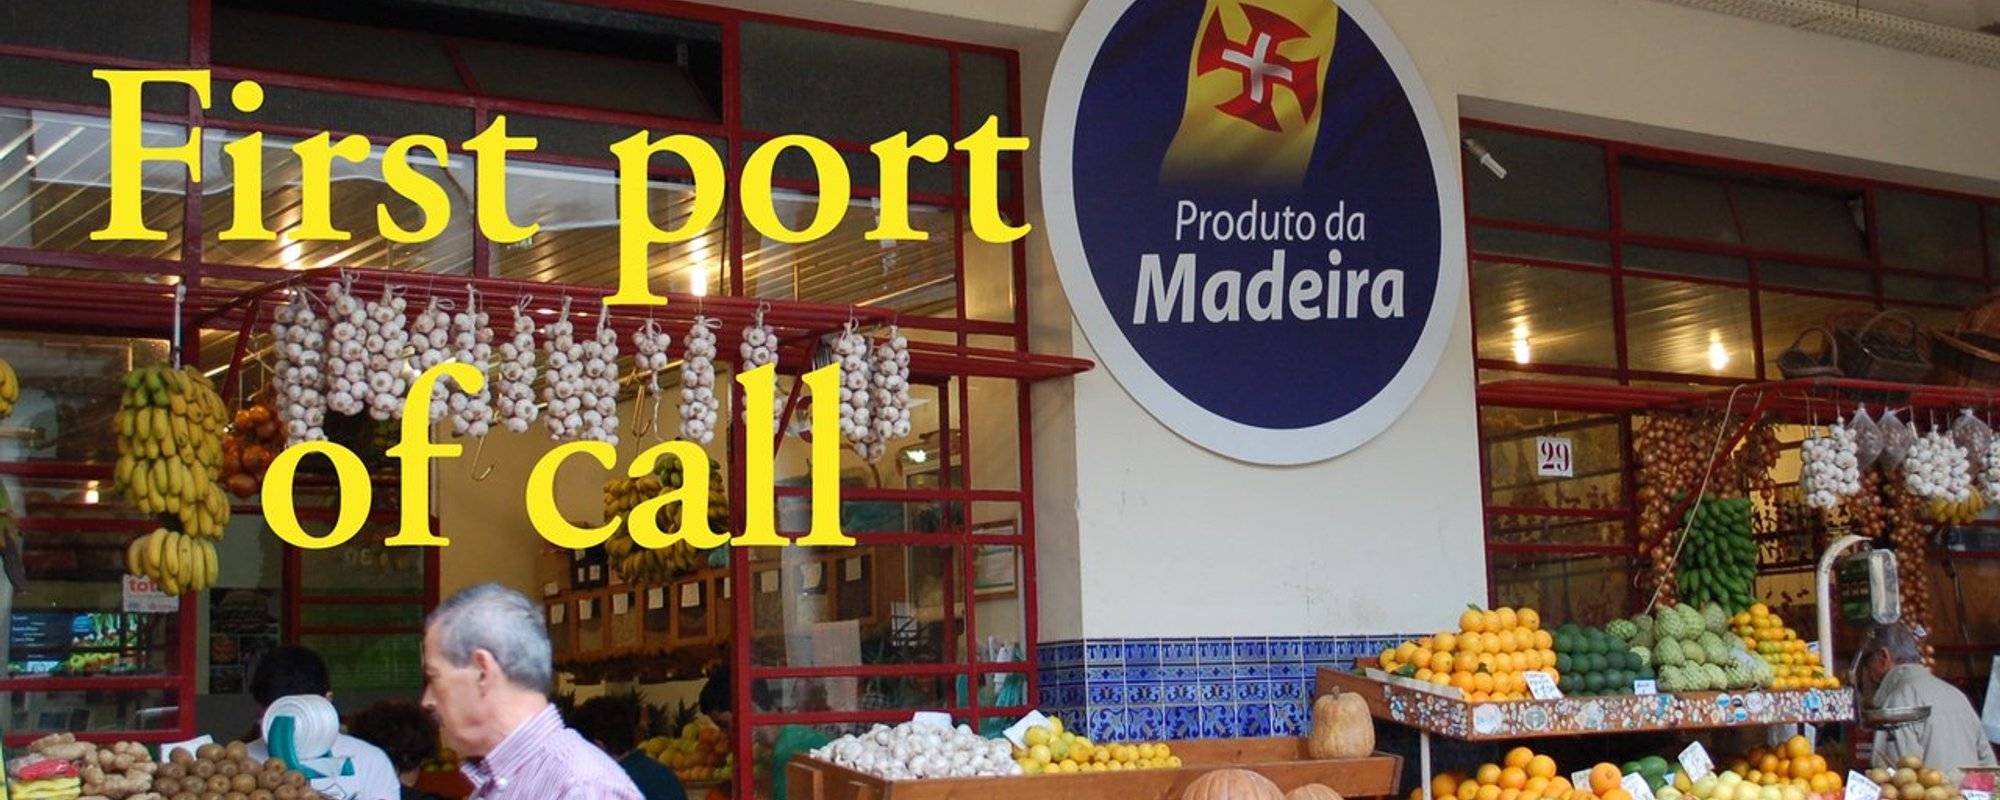 First port of call Madeira, Portual